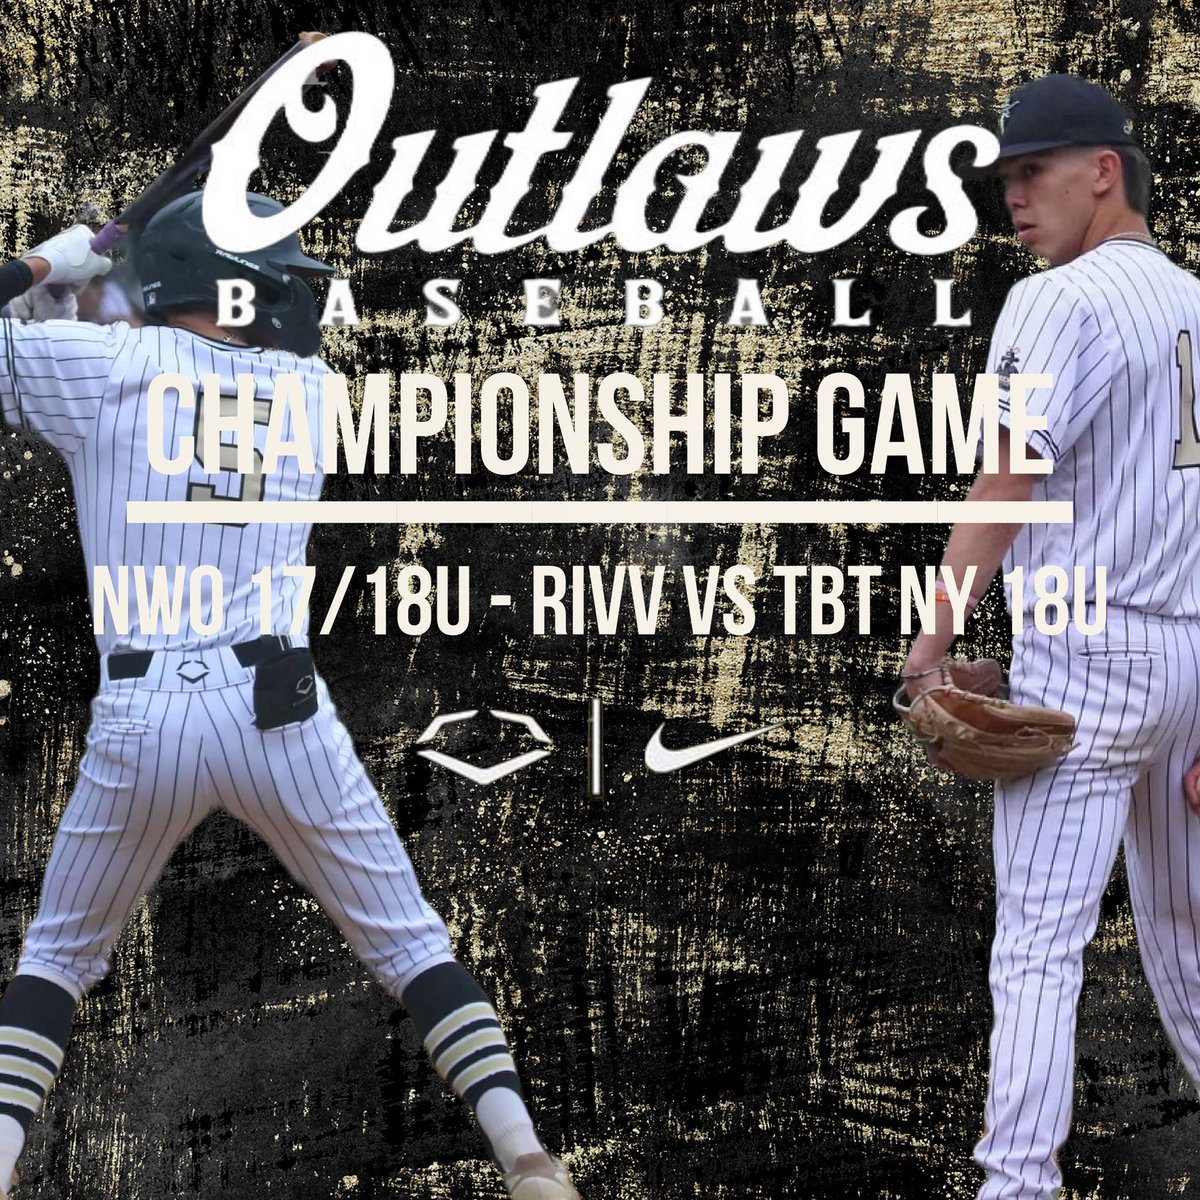 Outlaws 17/18u Rivera advance to the Championship Game vs TBT NY 18U.
.
The Rock 📍